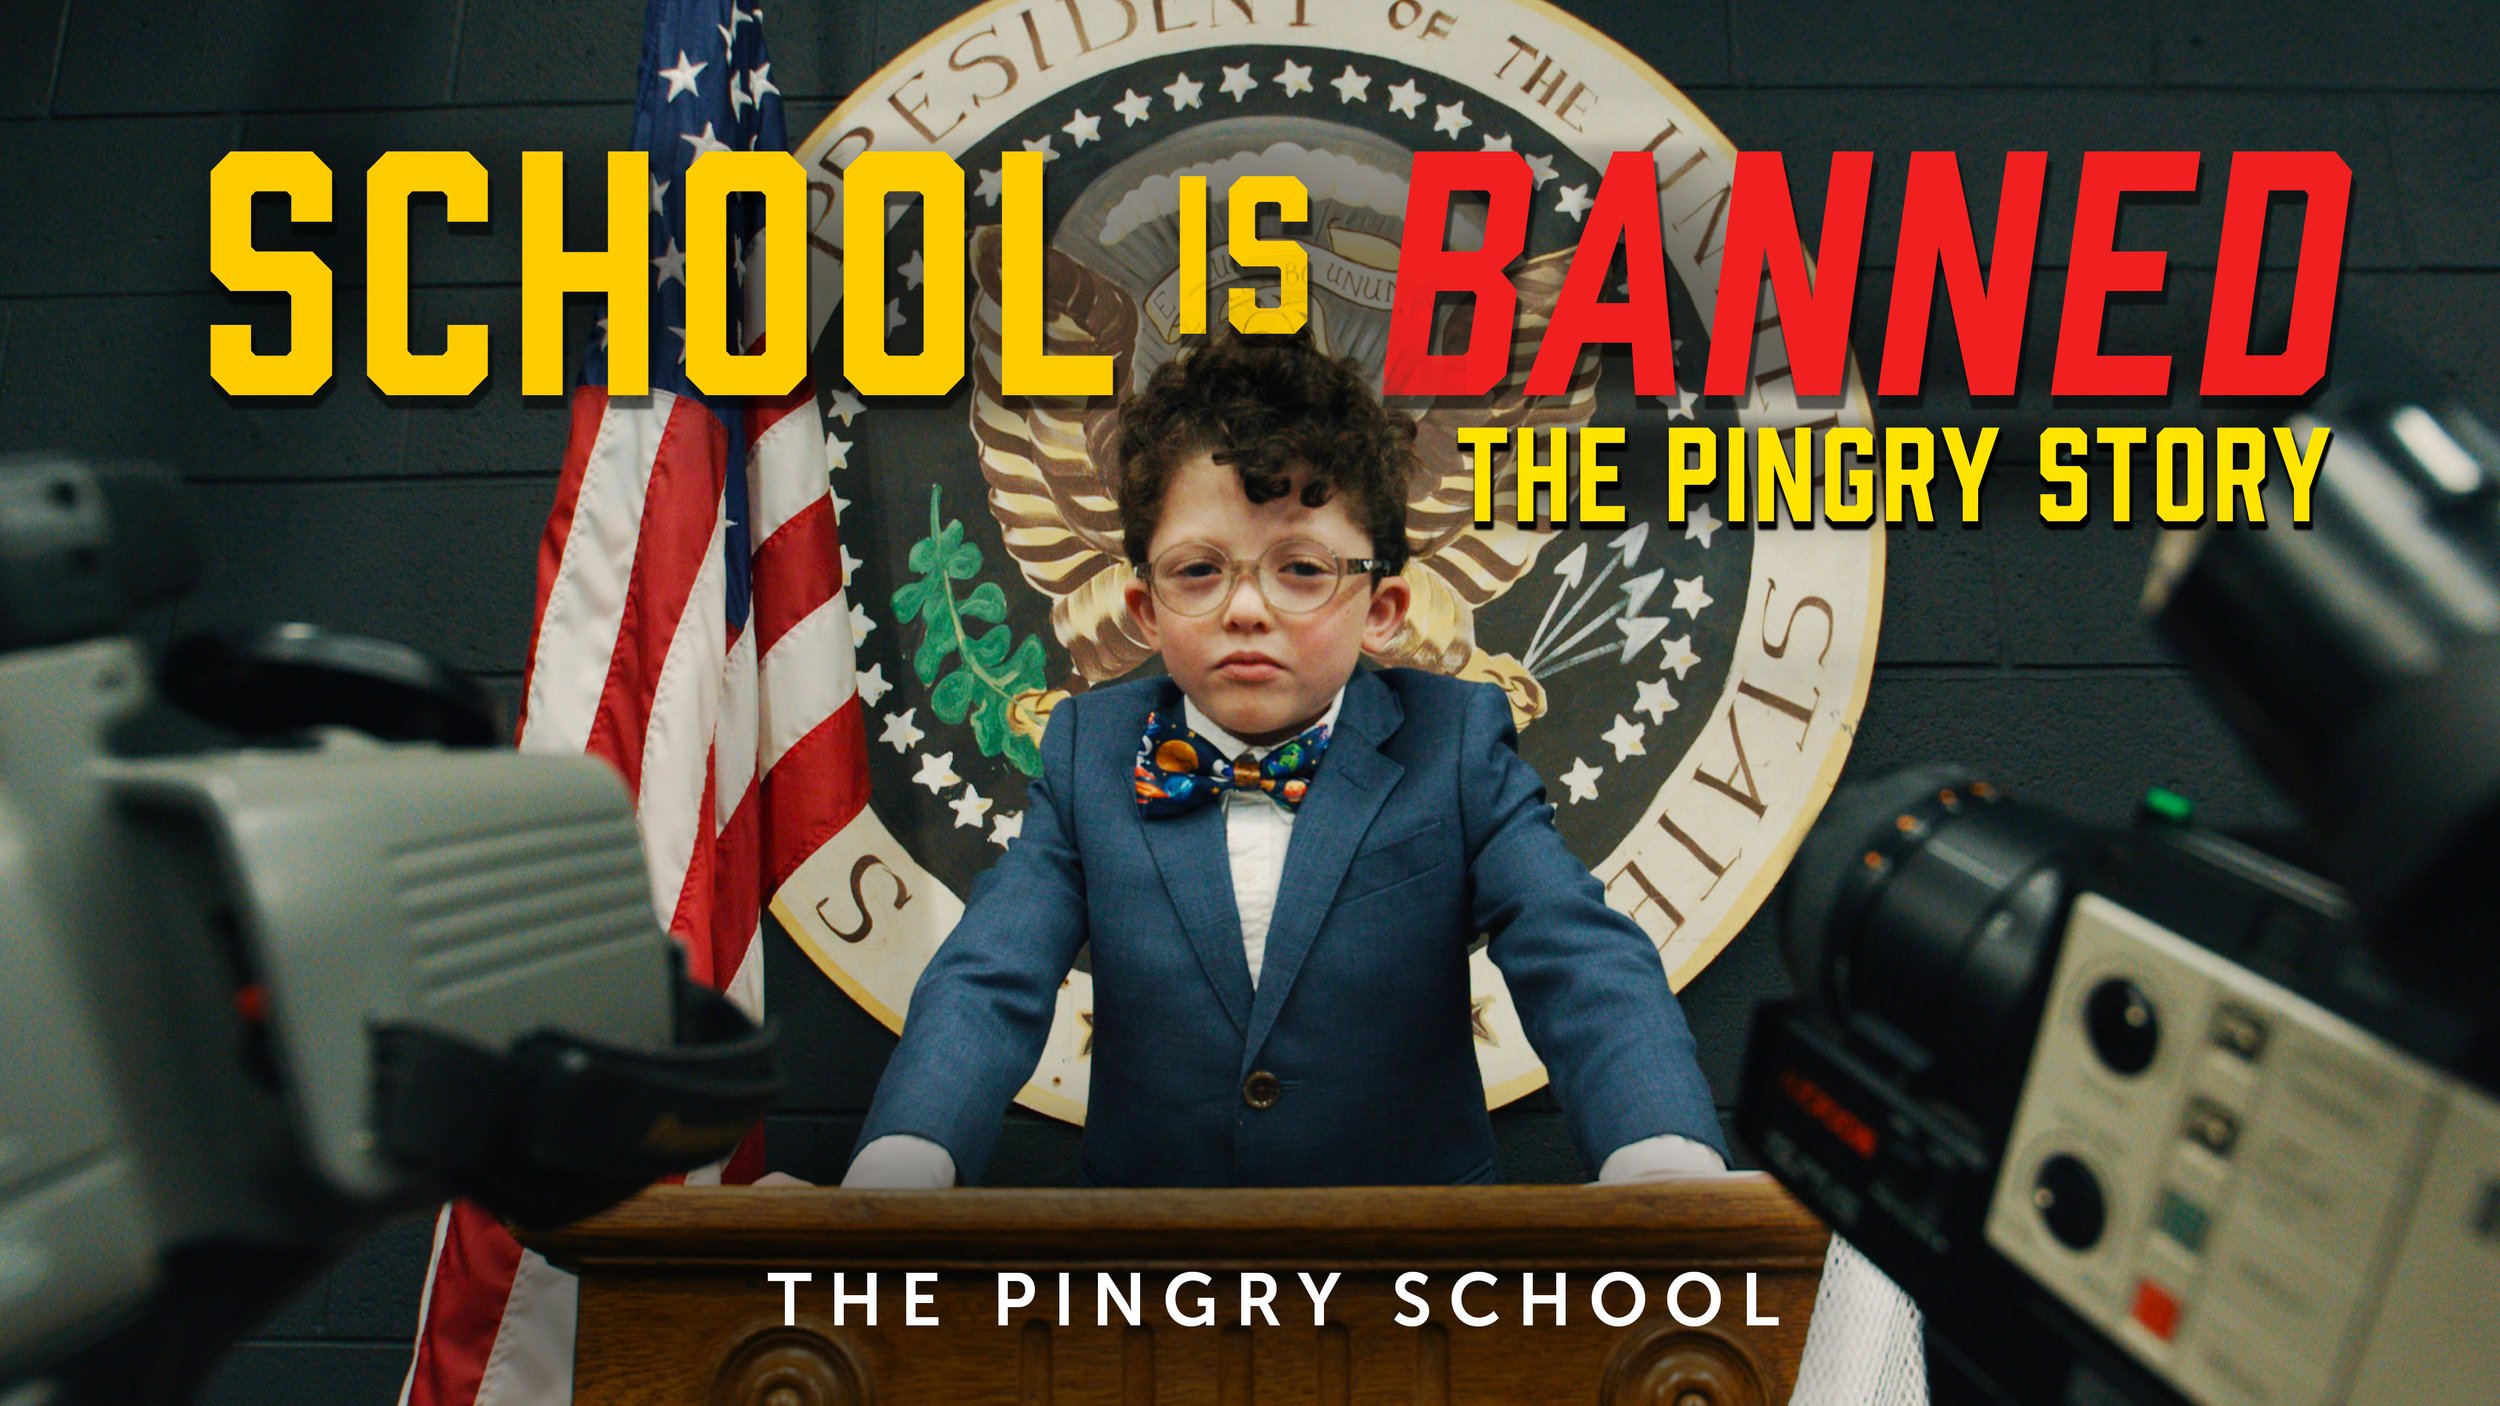 Pingry School